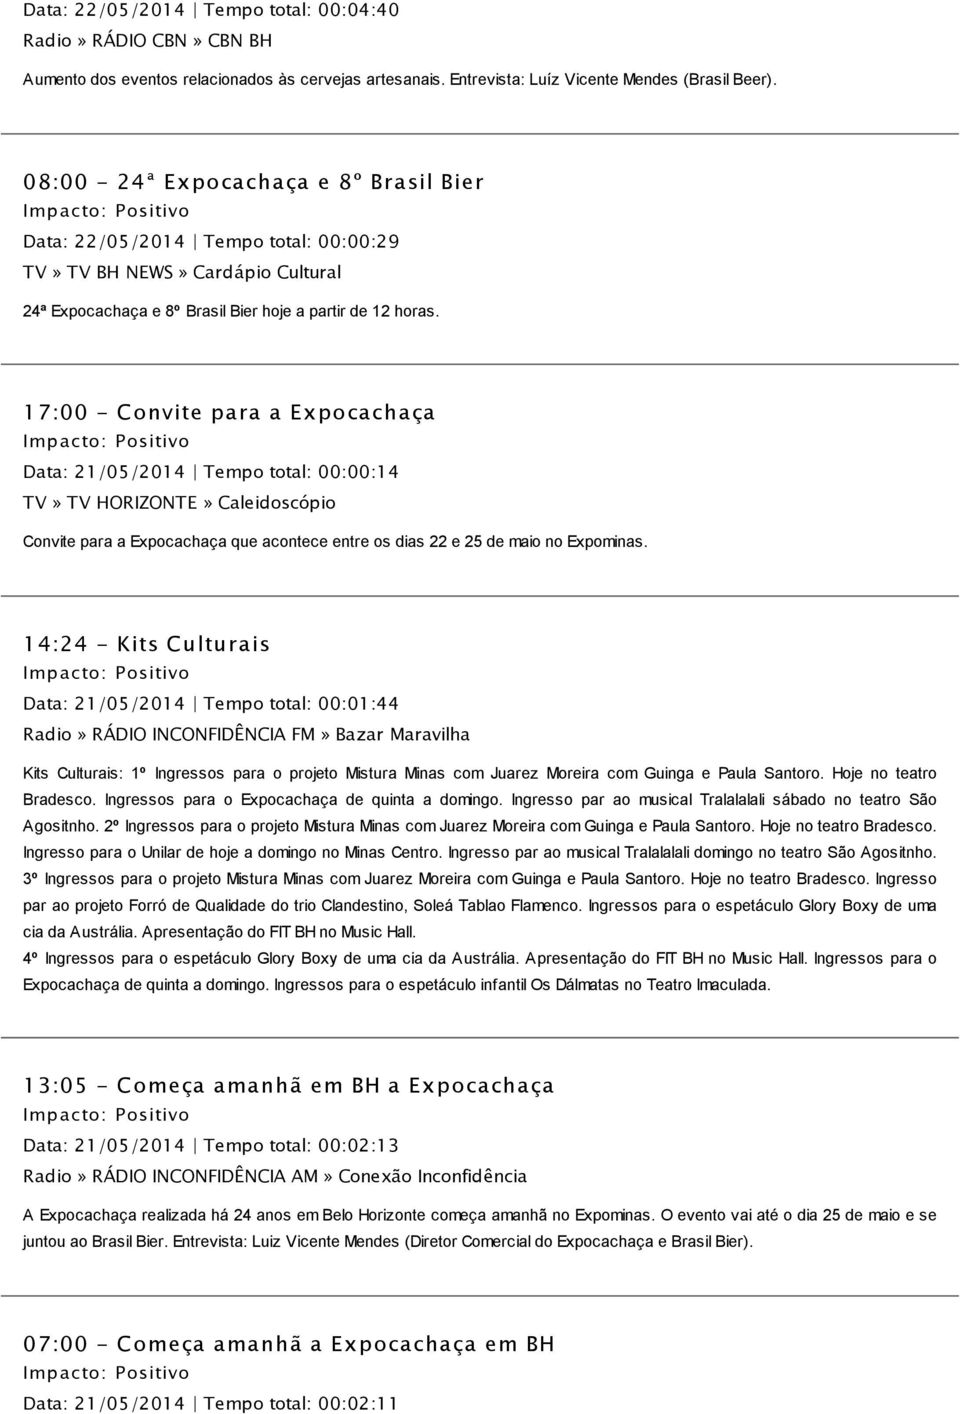 17:00 - Convite para a Expocachaça Data: 21/05/2014 Tempo total: 00:00:14 TV» TV HORIZONTE» Caleidoscópio Convite para a Expocachaça que acontece entre os dias 22 e 25 de maio no Expominas.